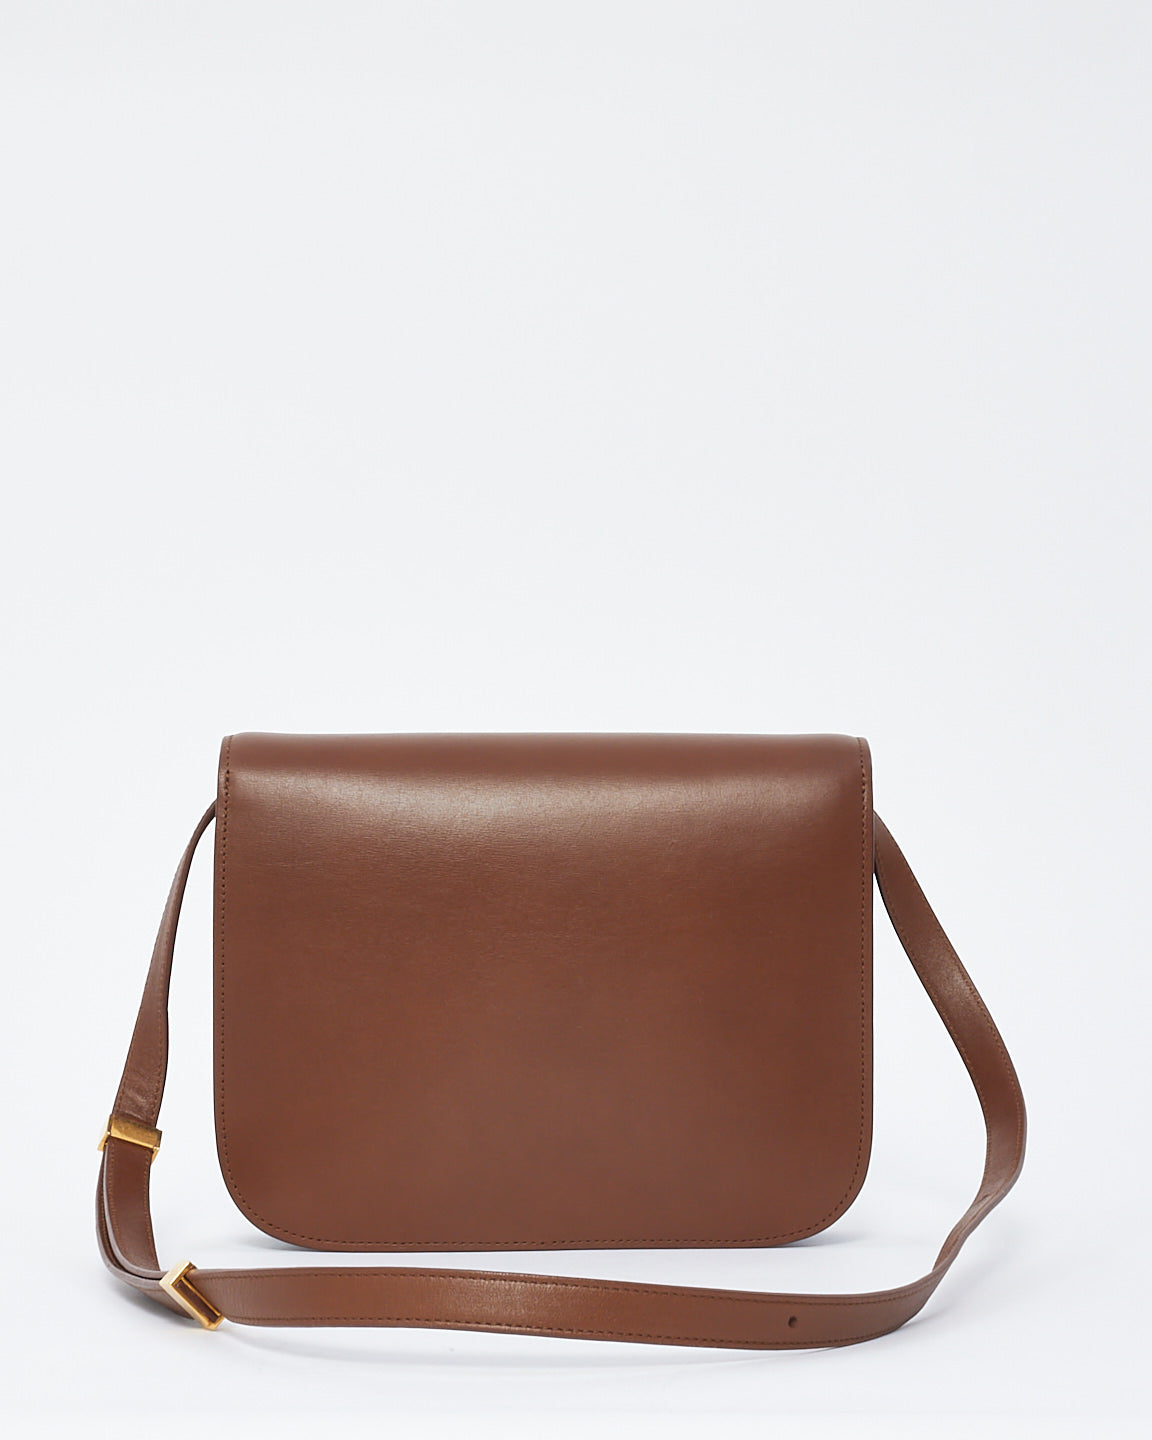 Celine Tan Box Calfskin Leather Medium Classic Bag